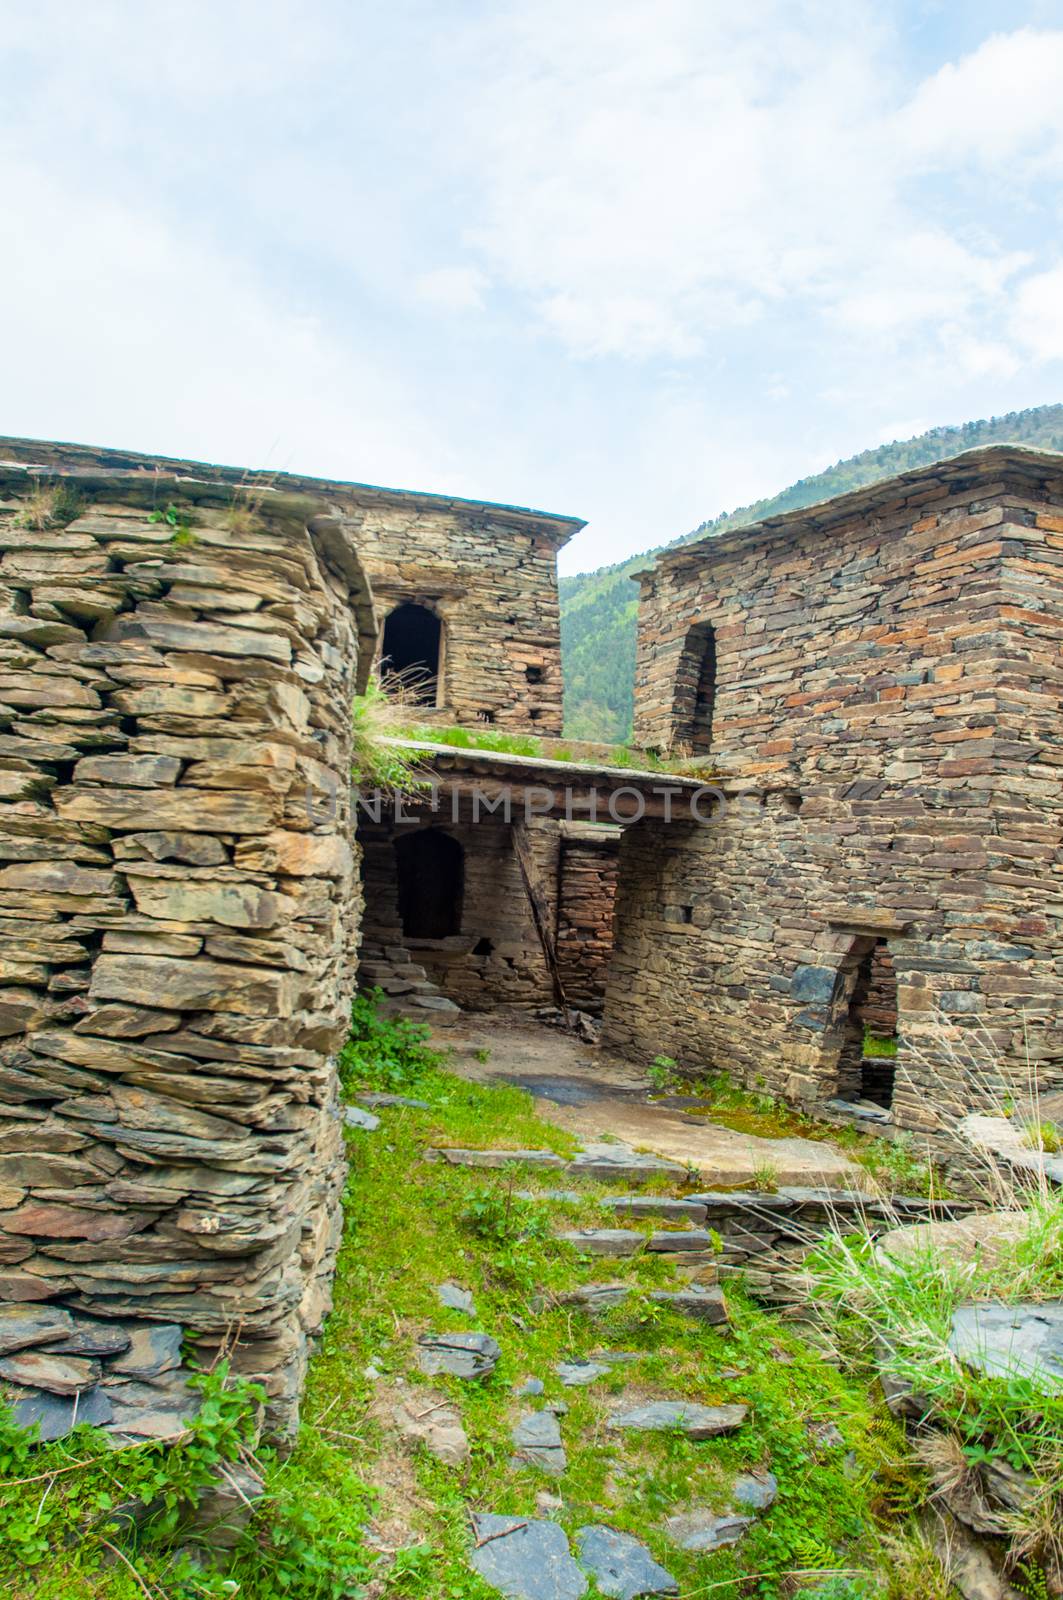 Shatili mountain village in historical region of Georgia Khevsureti